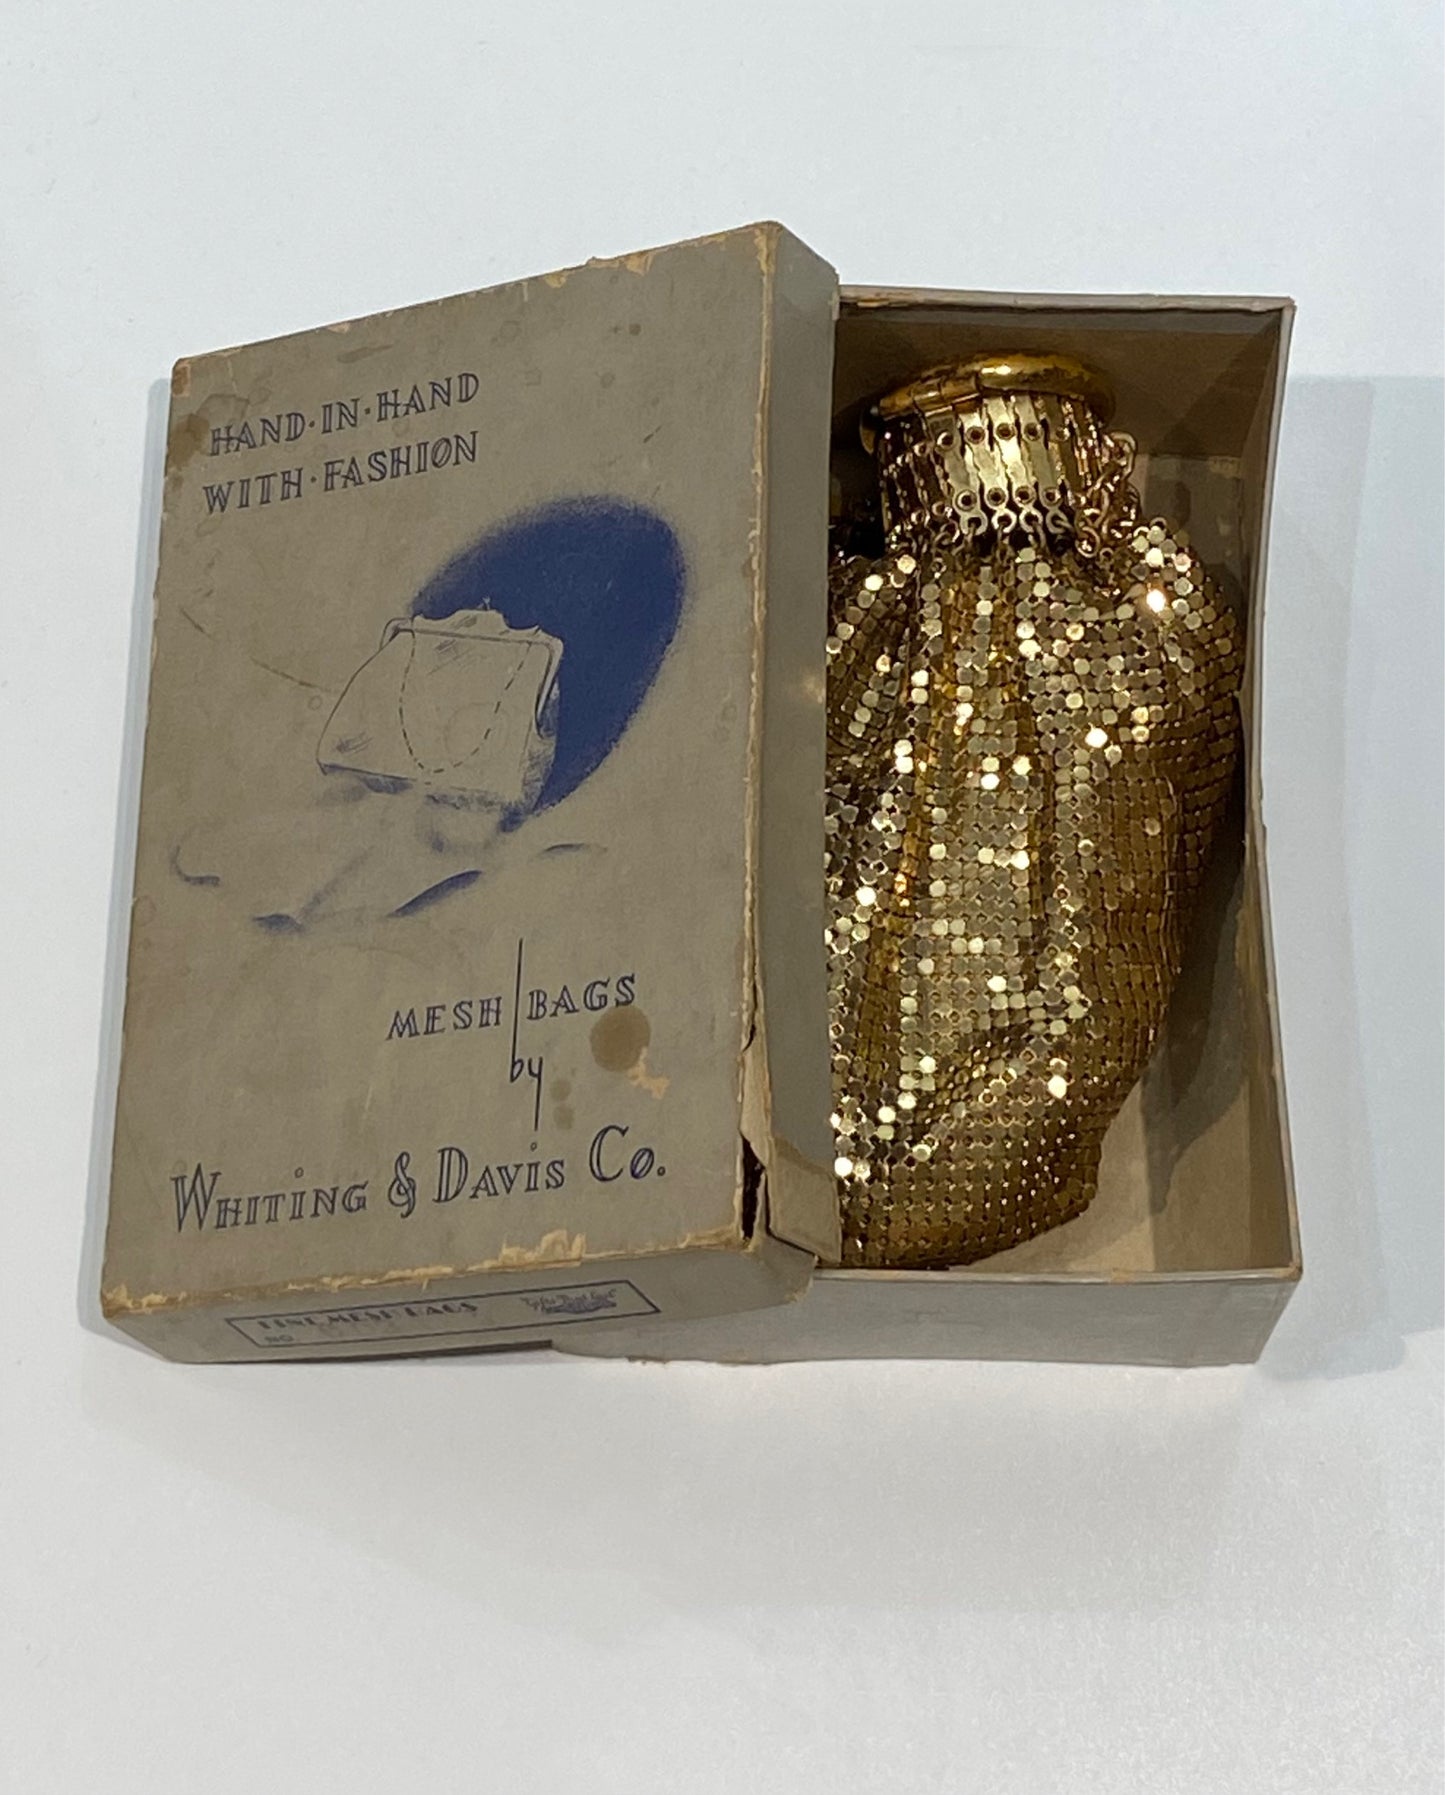 Vintage Whiting & Davis Gold Mesh Chain Evening Bag with Original Box